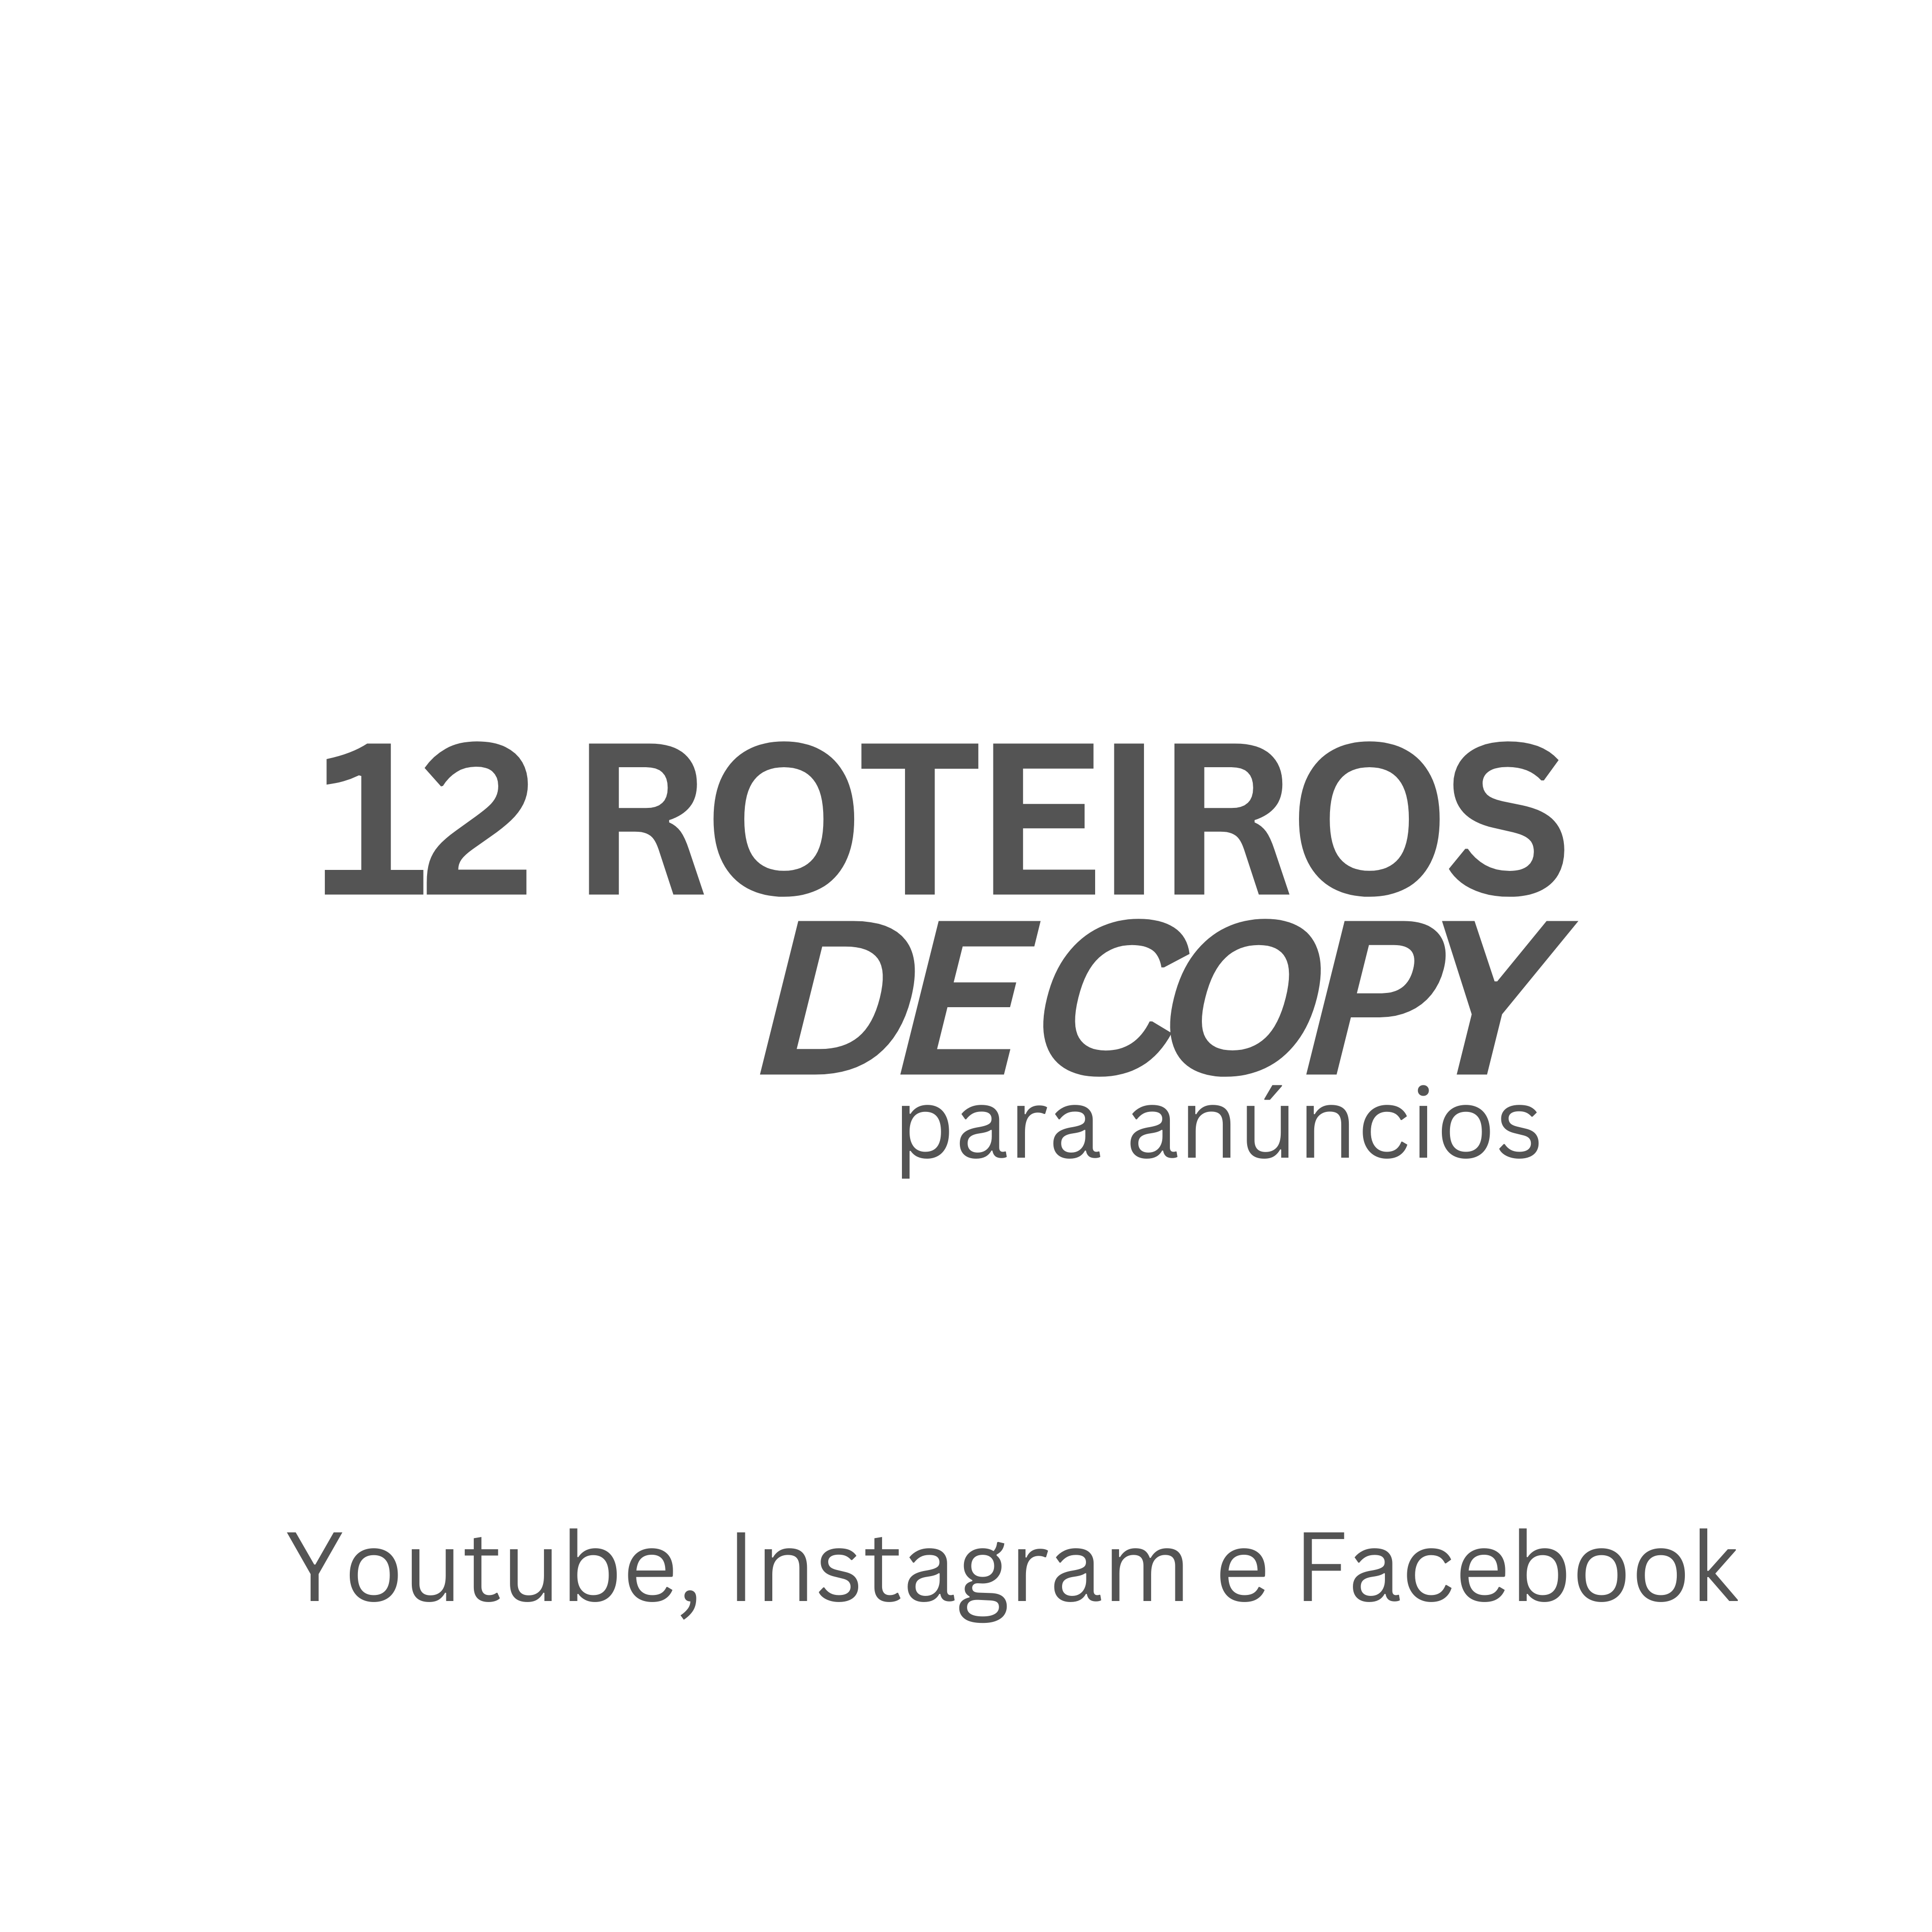 12 roteiros de copy para anúncios (Youtube, Instagram, Facebook) 105